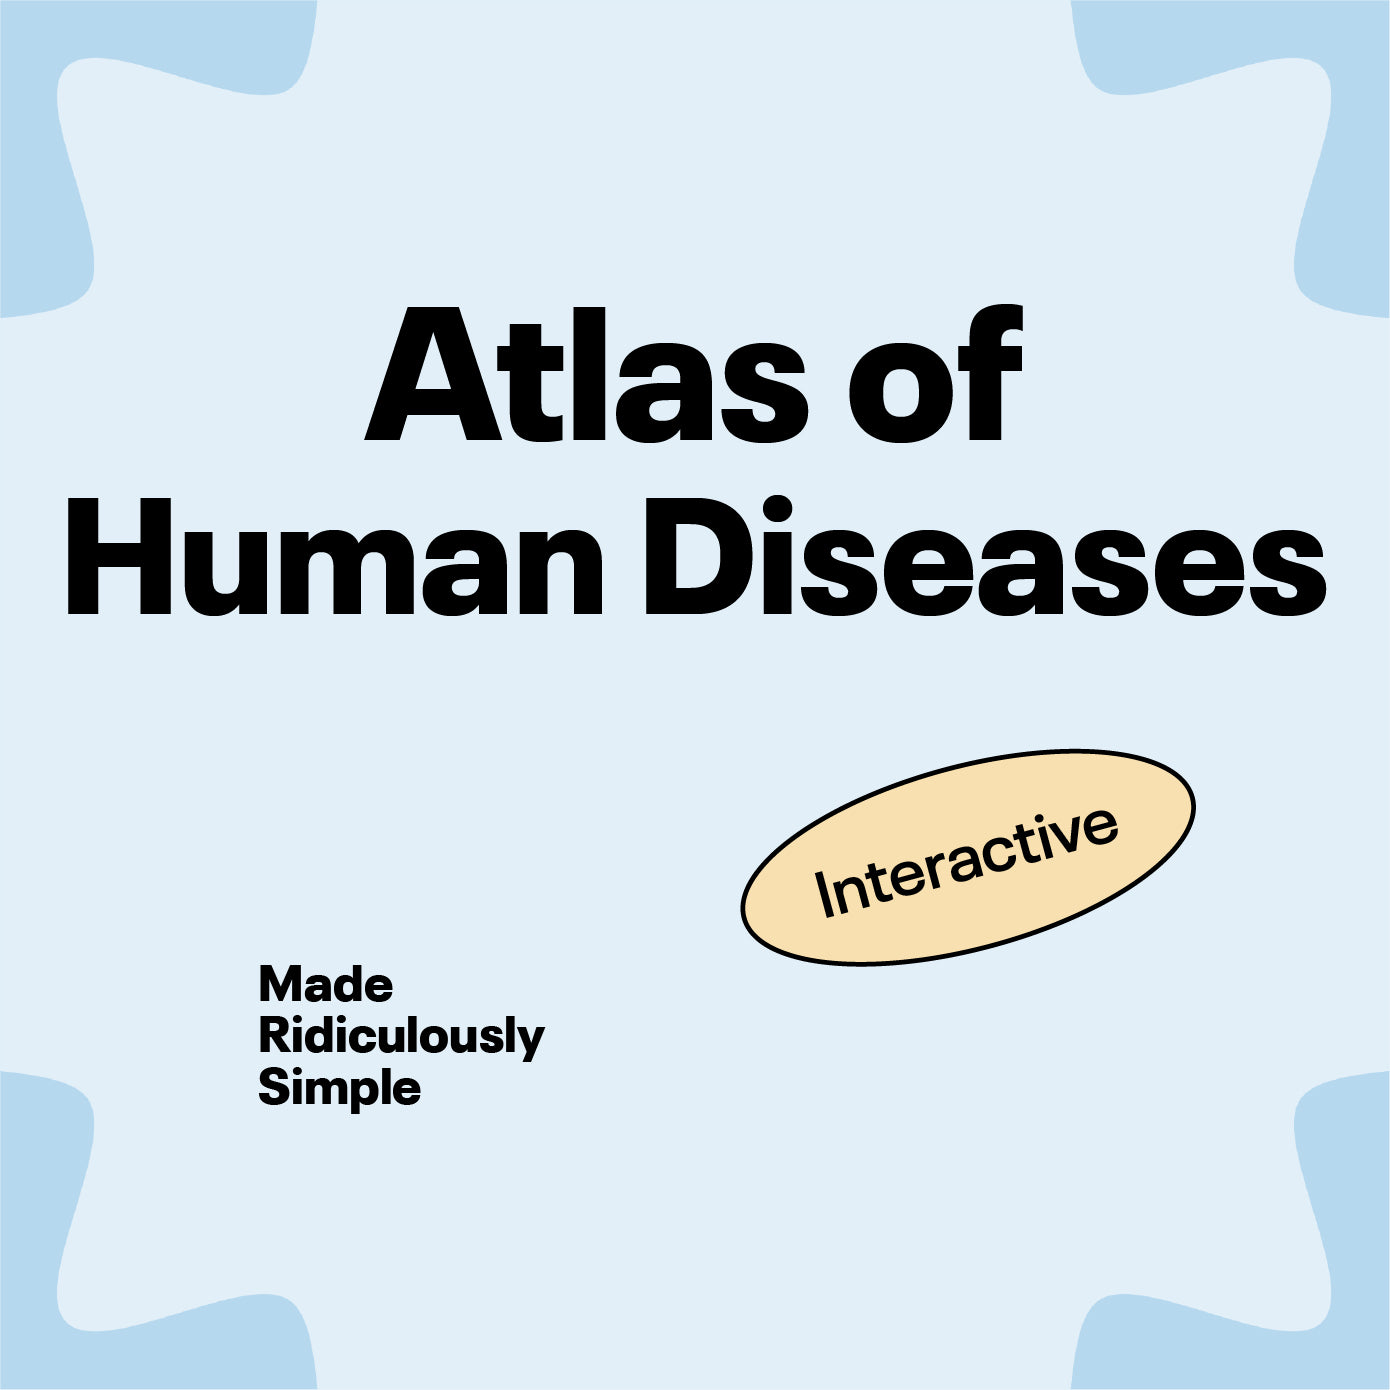 Atlas of Human Diseases